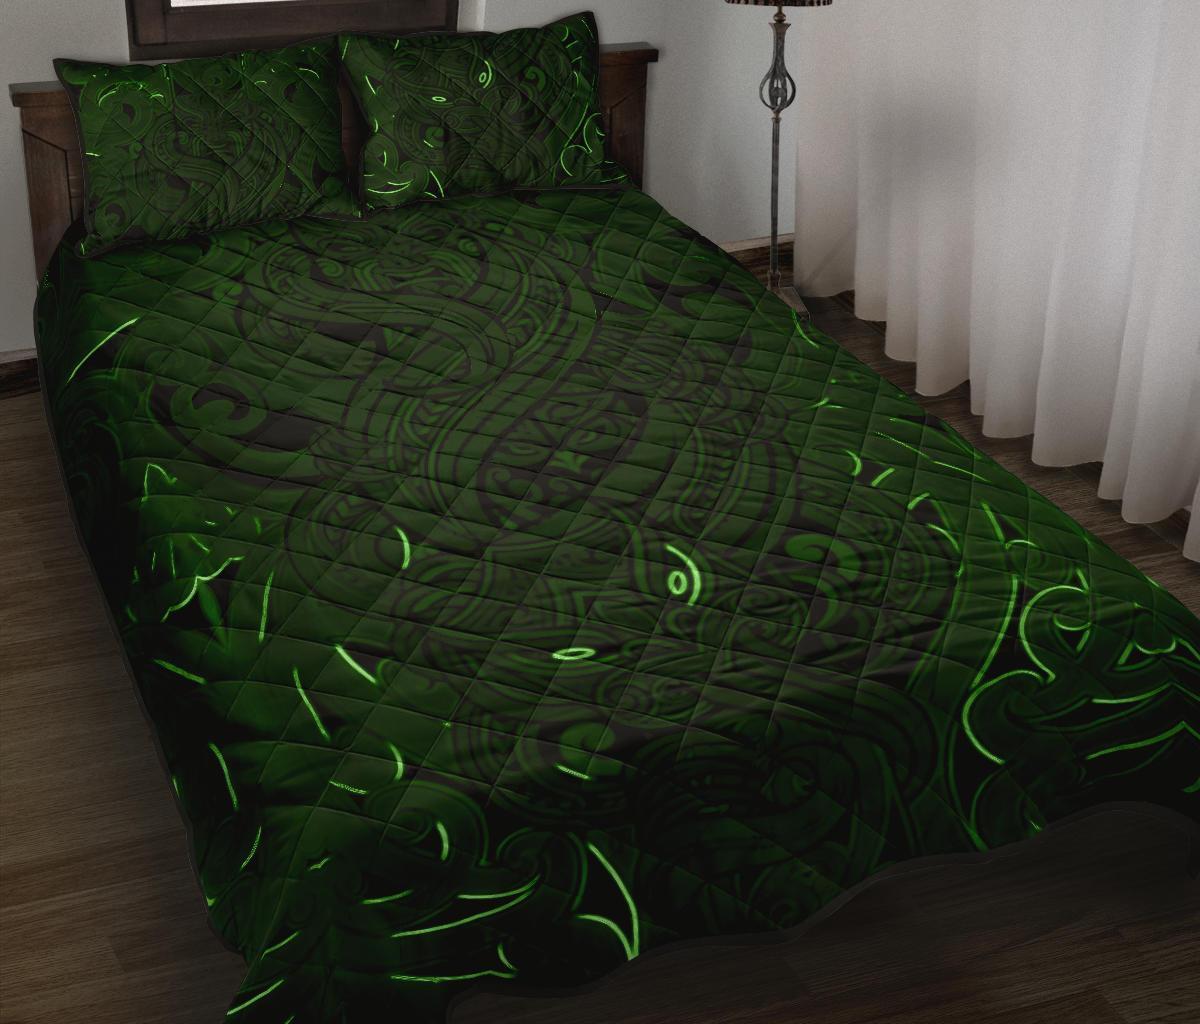 New Zealand Quilt Bed Set, Maori Gods Quilt And Pillow Cover Tumatauenga (God Of War) - Green Green - Polynesian Pride